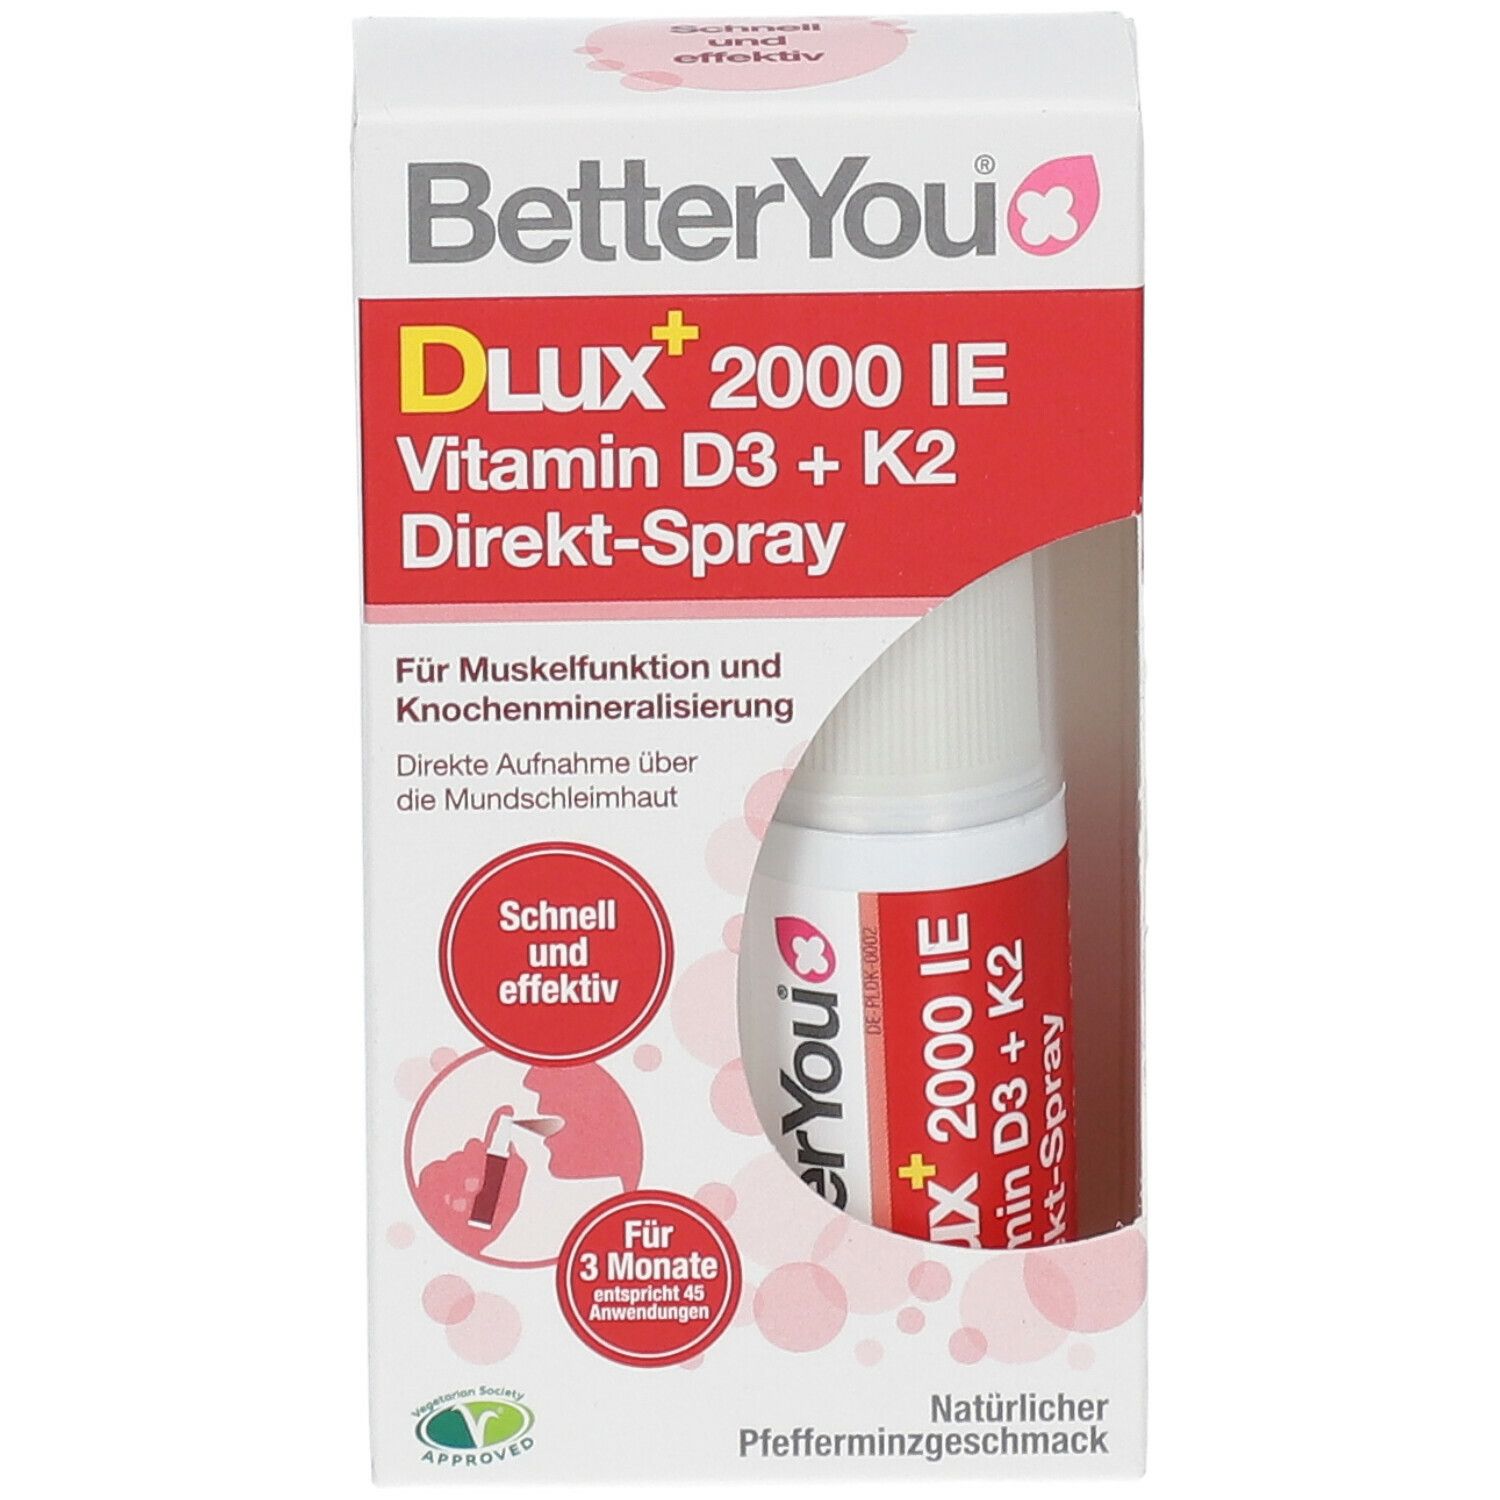 BetterYou® DLUX 2000 IE Vitamin D3+K2 Direkt-Spray